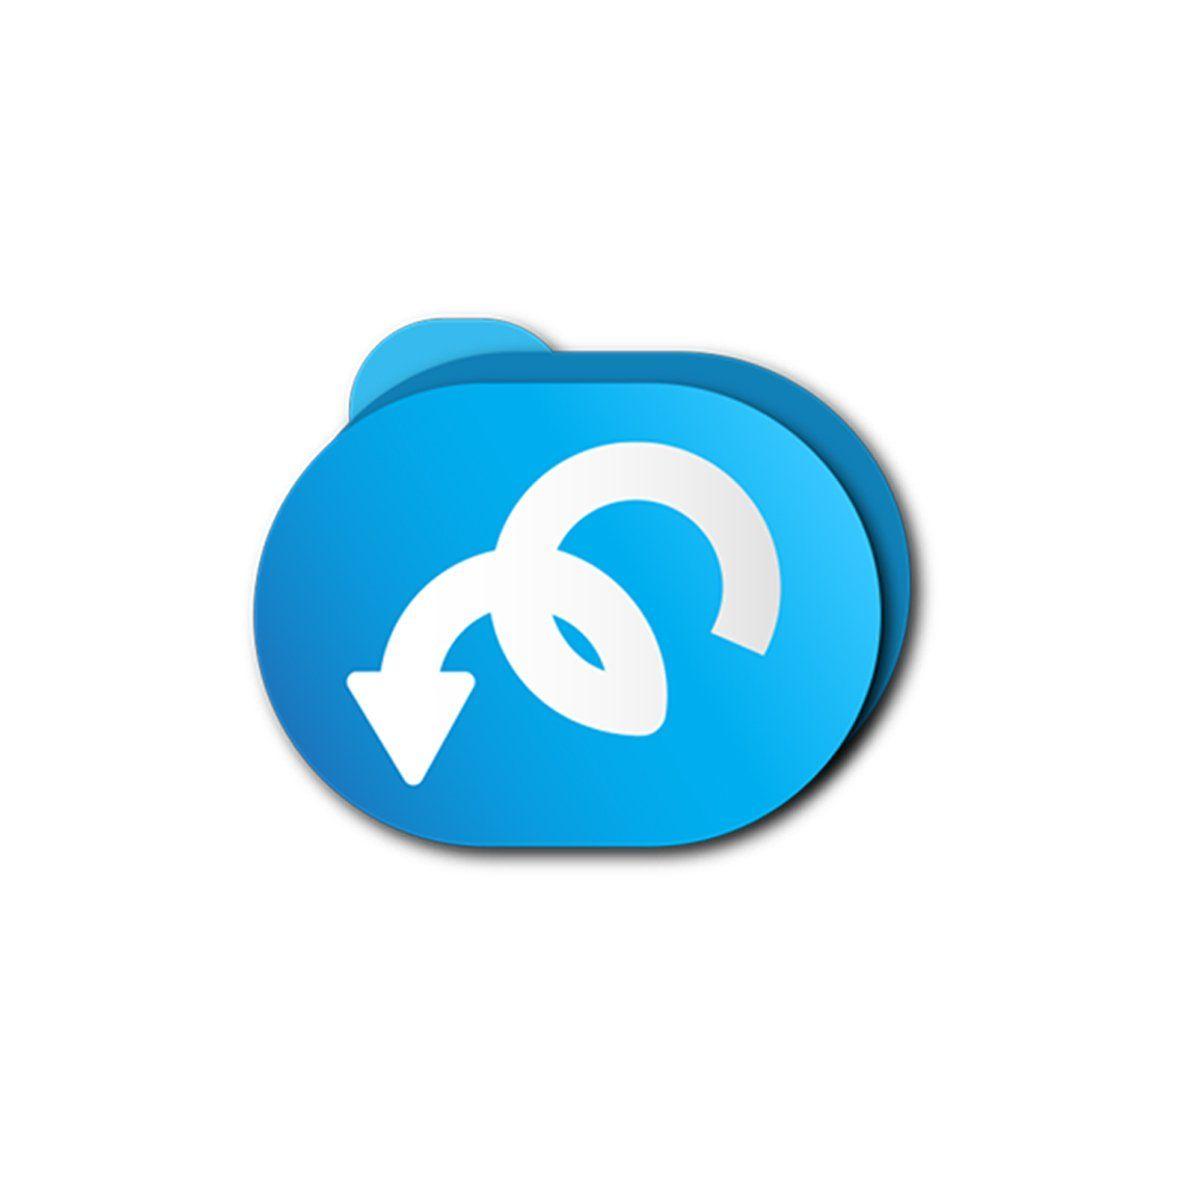 FrostWire Logo - My New Logo Design for FrostWire Torrent app